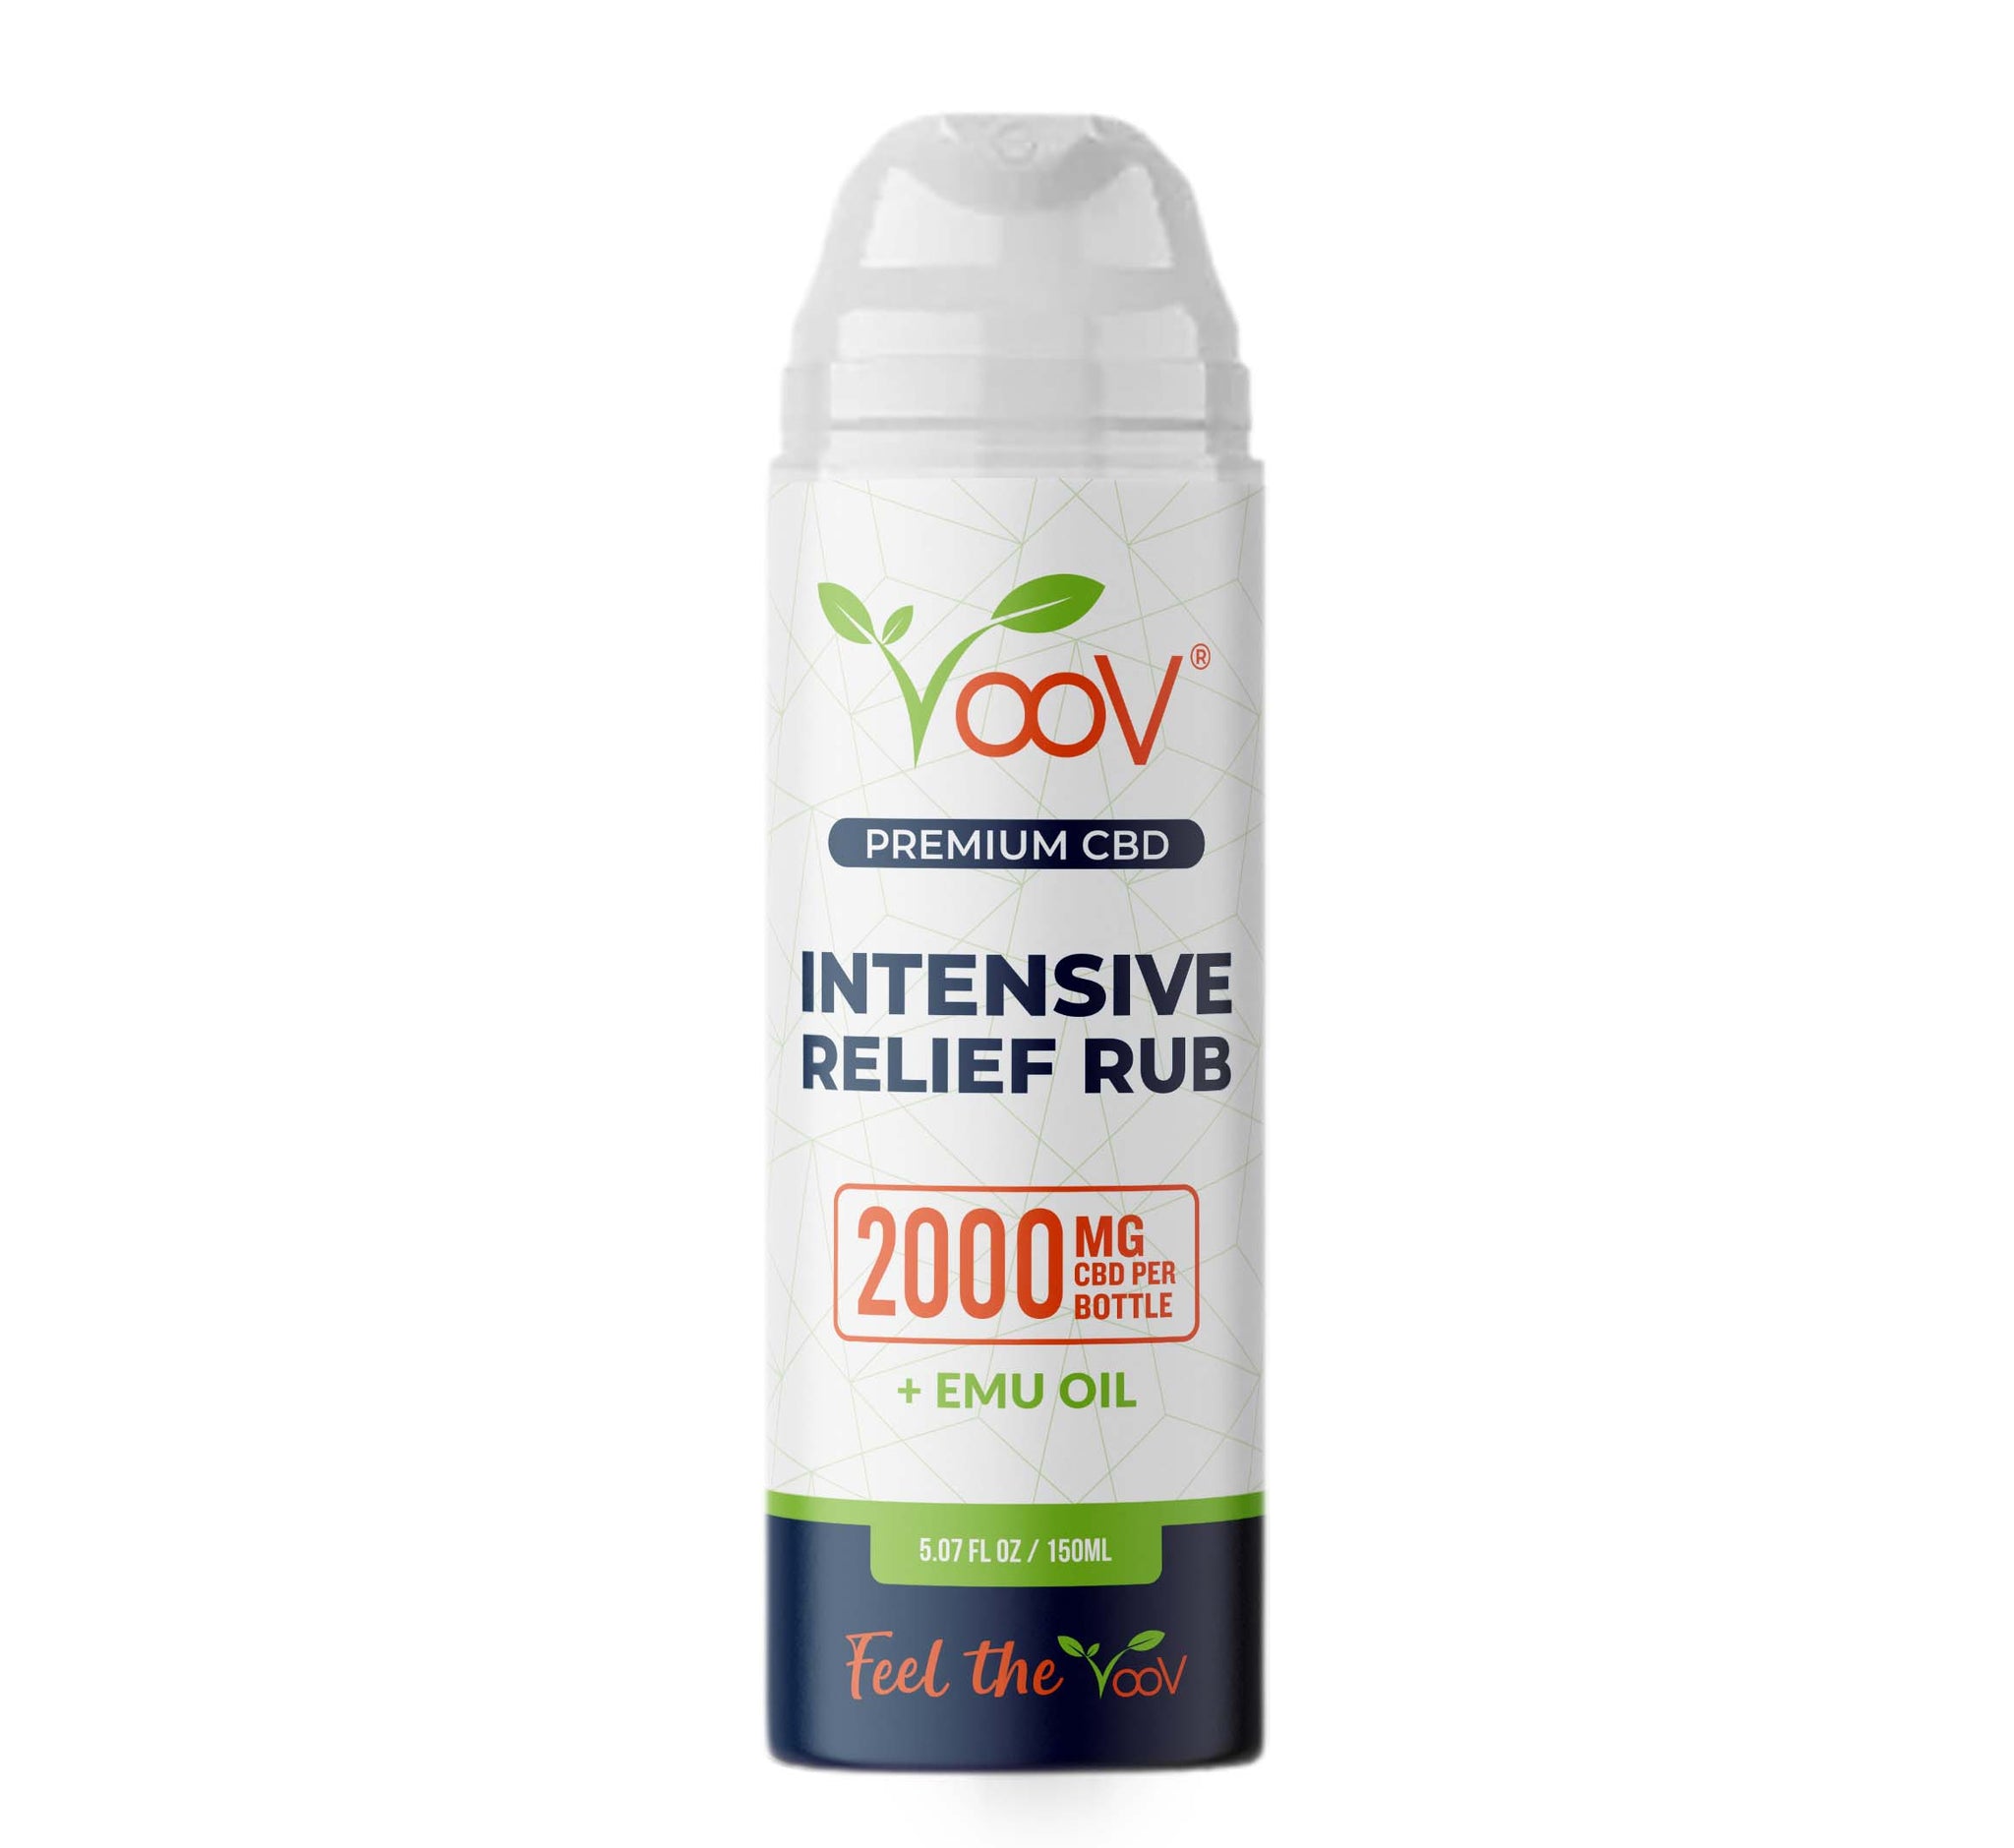 Voov Premium CBD Intensive Relief Rub + Emu Oil  2000 mg